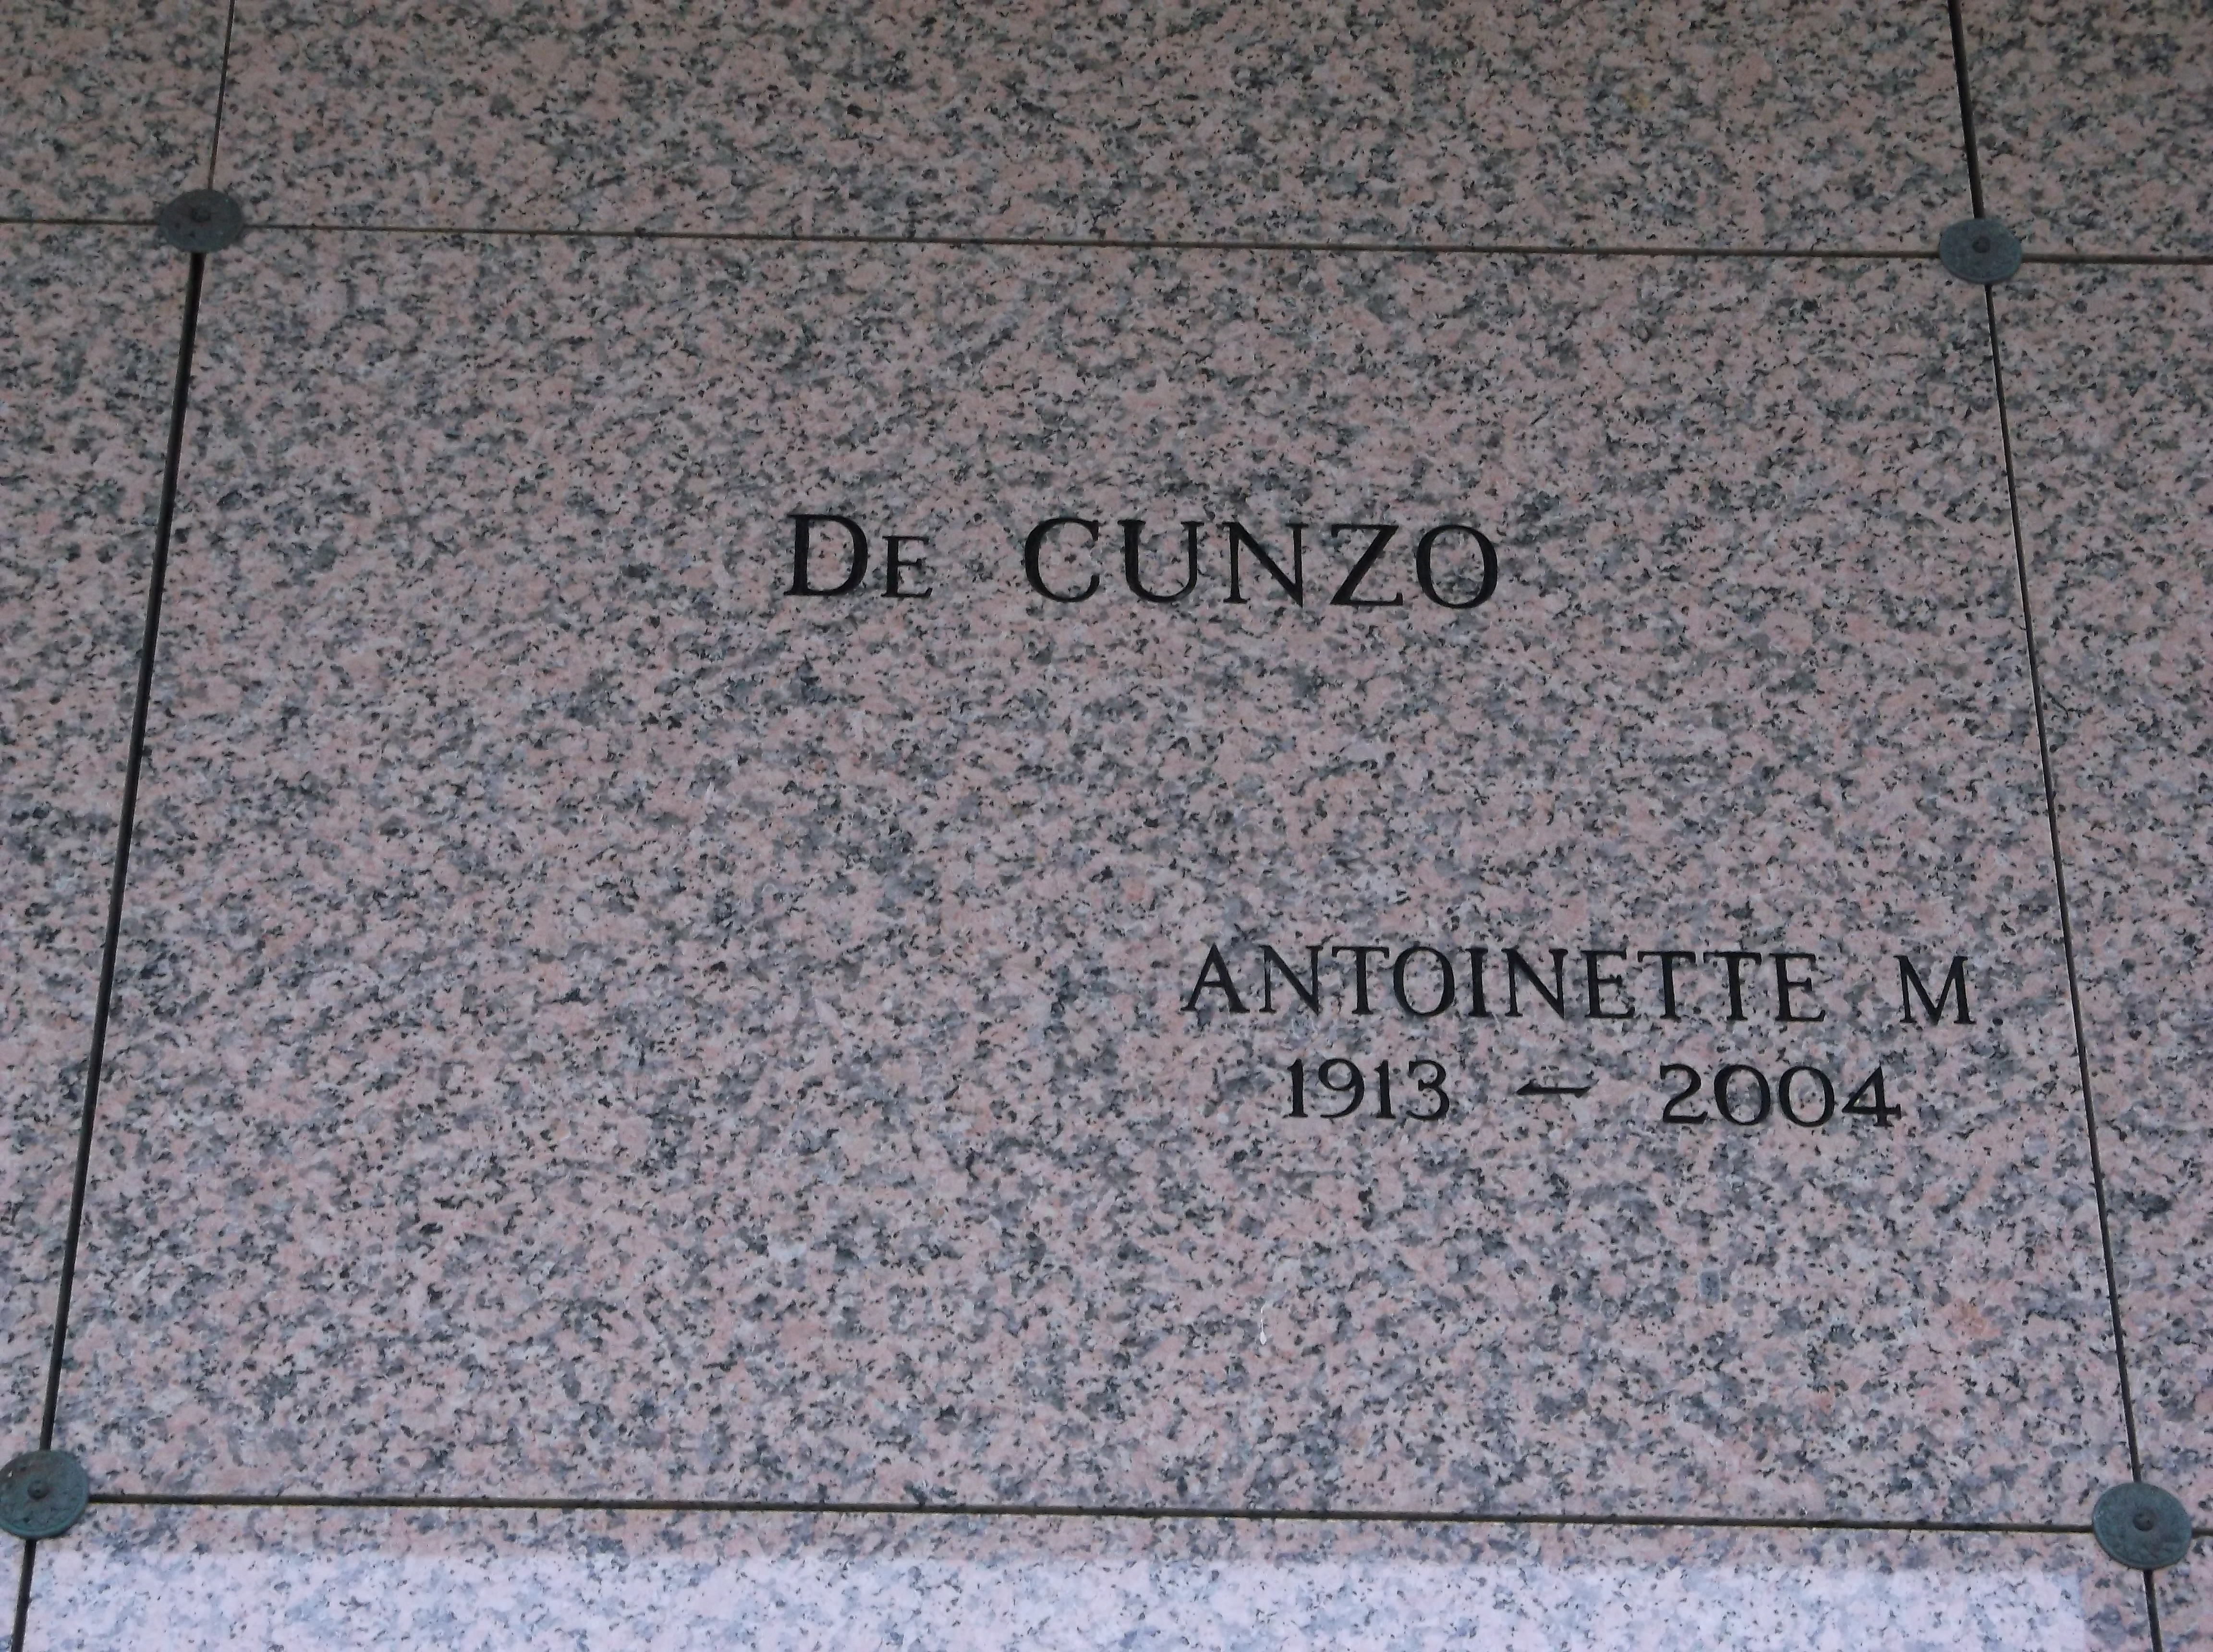 Antoinette M De Cunzo